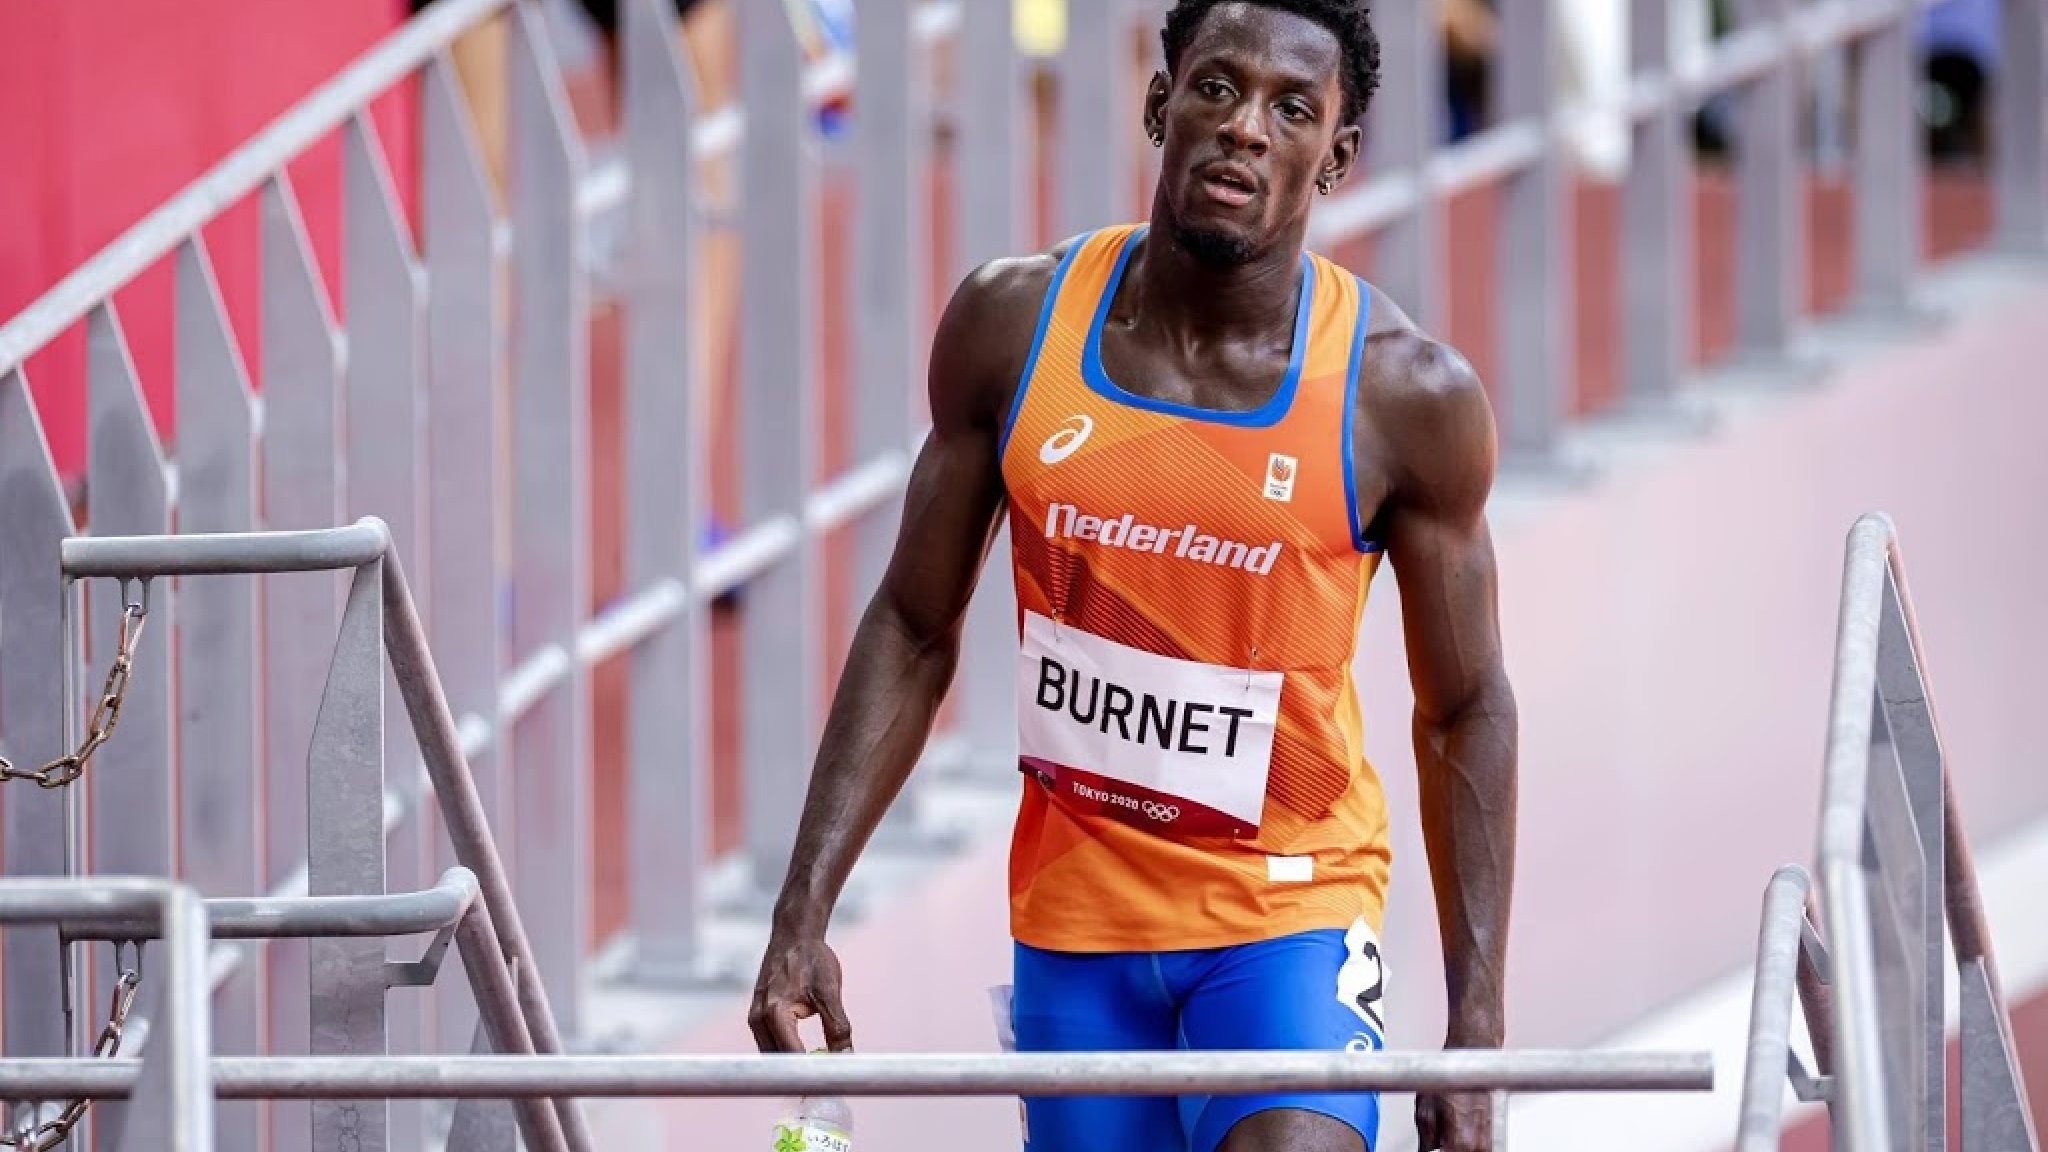 Sprinter Burnett will not reach 200 meters in Tokyo Games